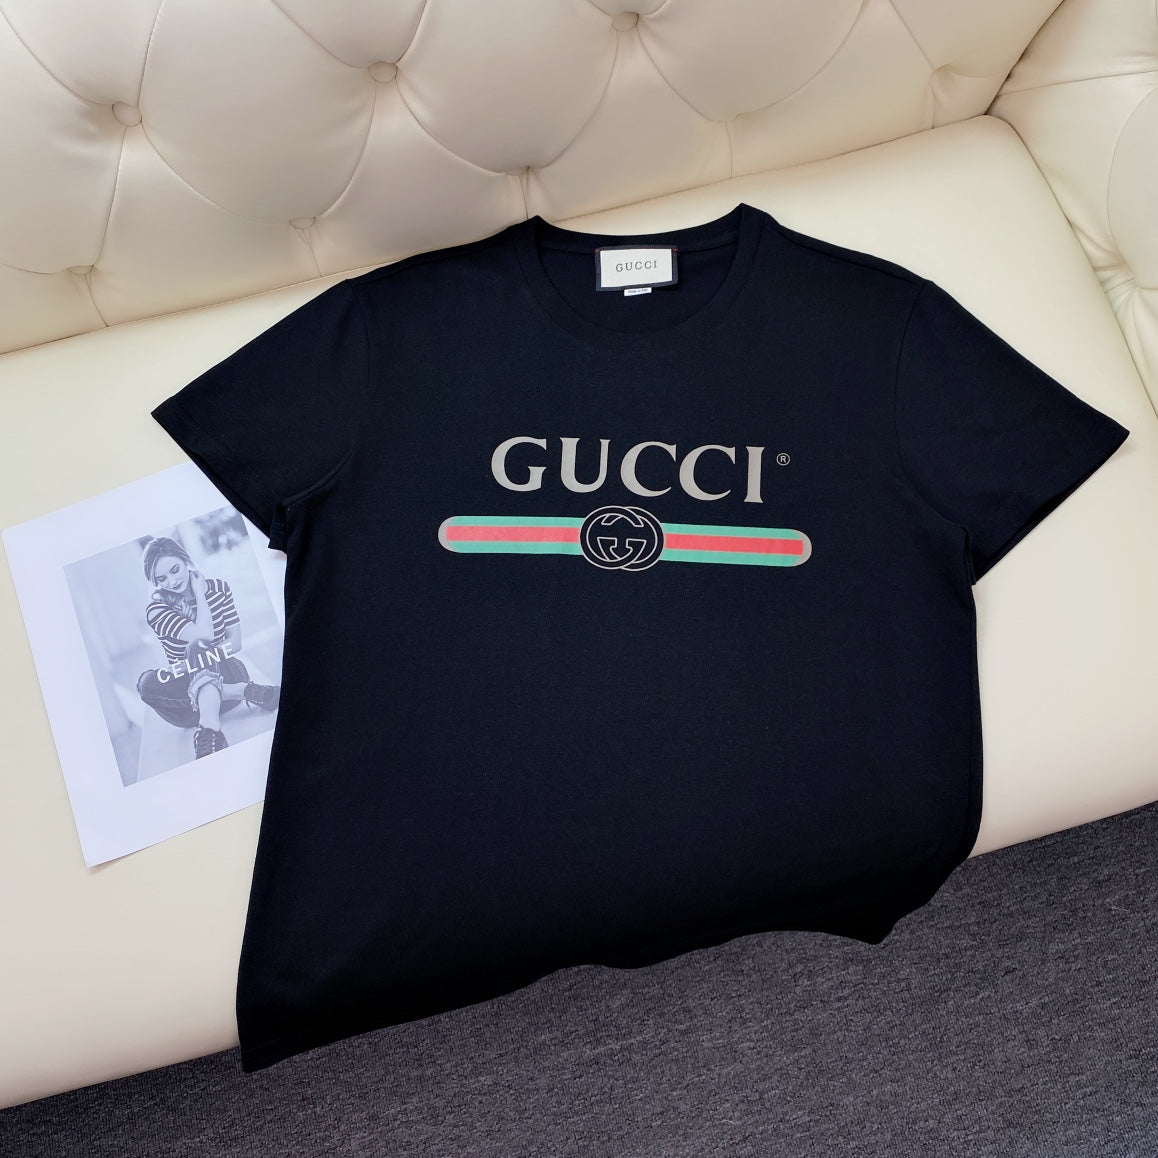 Gucci classic logo tee oversized